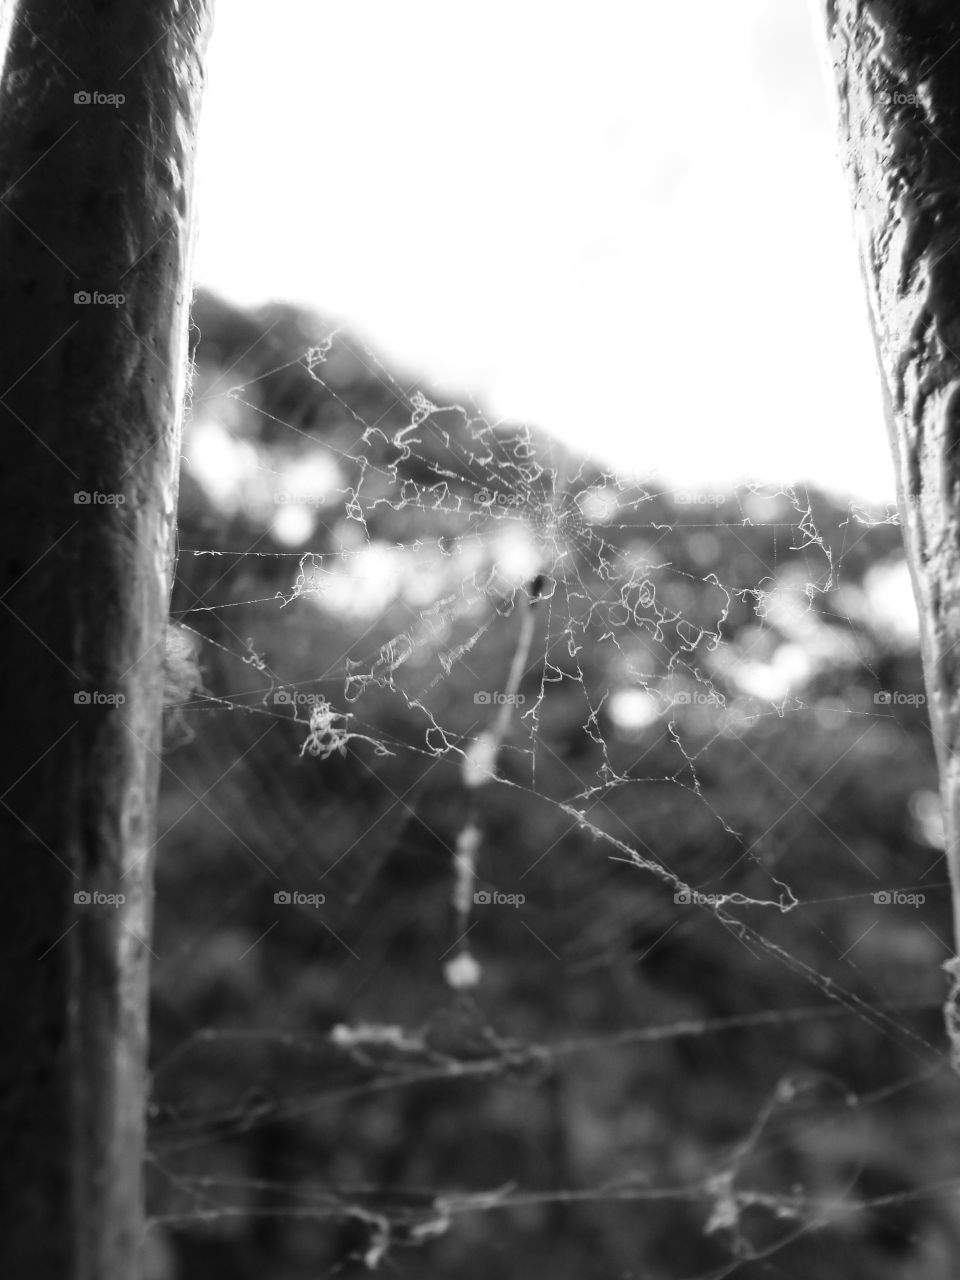 spider webs in puerto rico